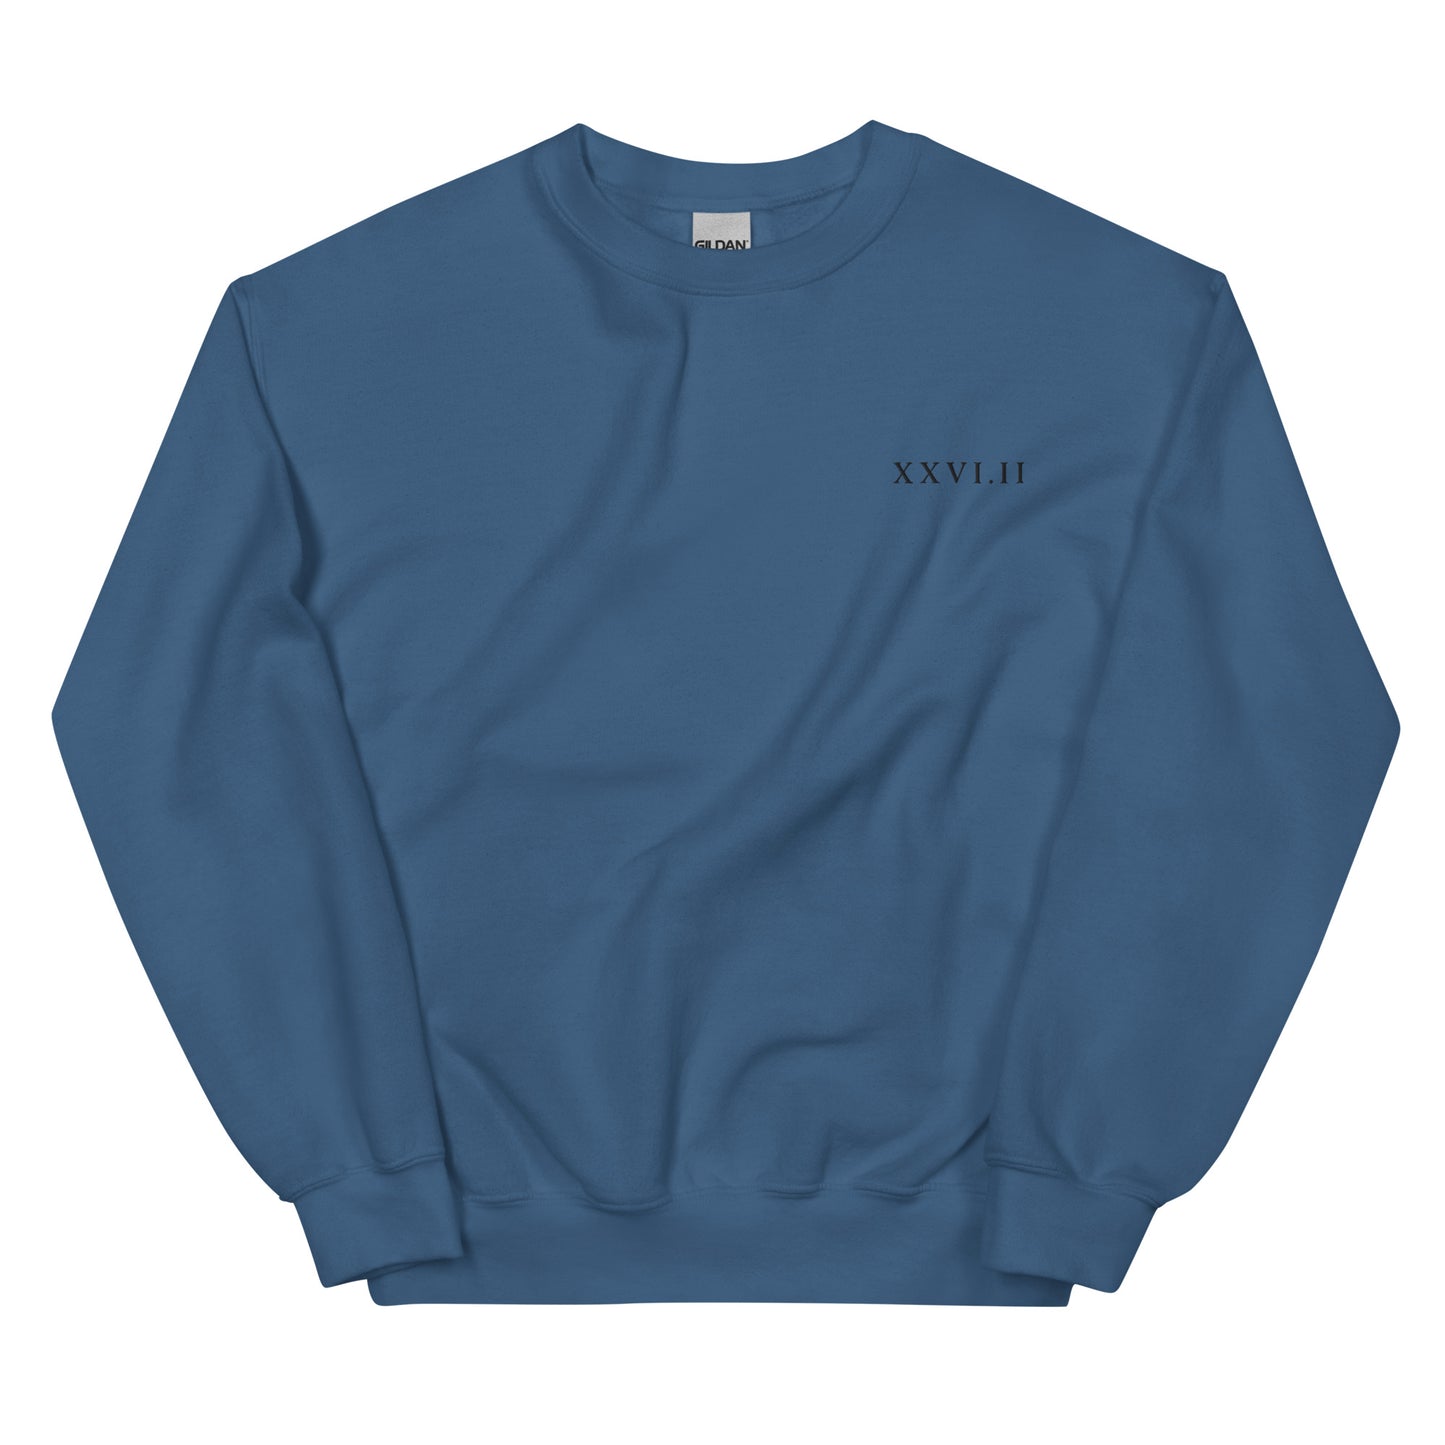 blue sweatshirt with xxvi.ii 26.2 marathon distance in roman numerals on the left breast